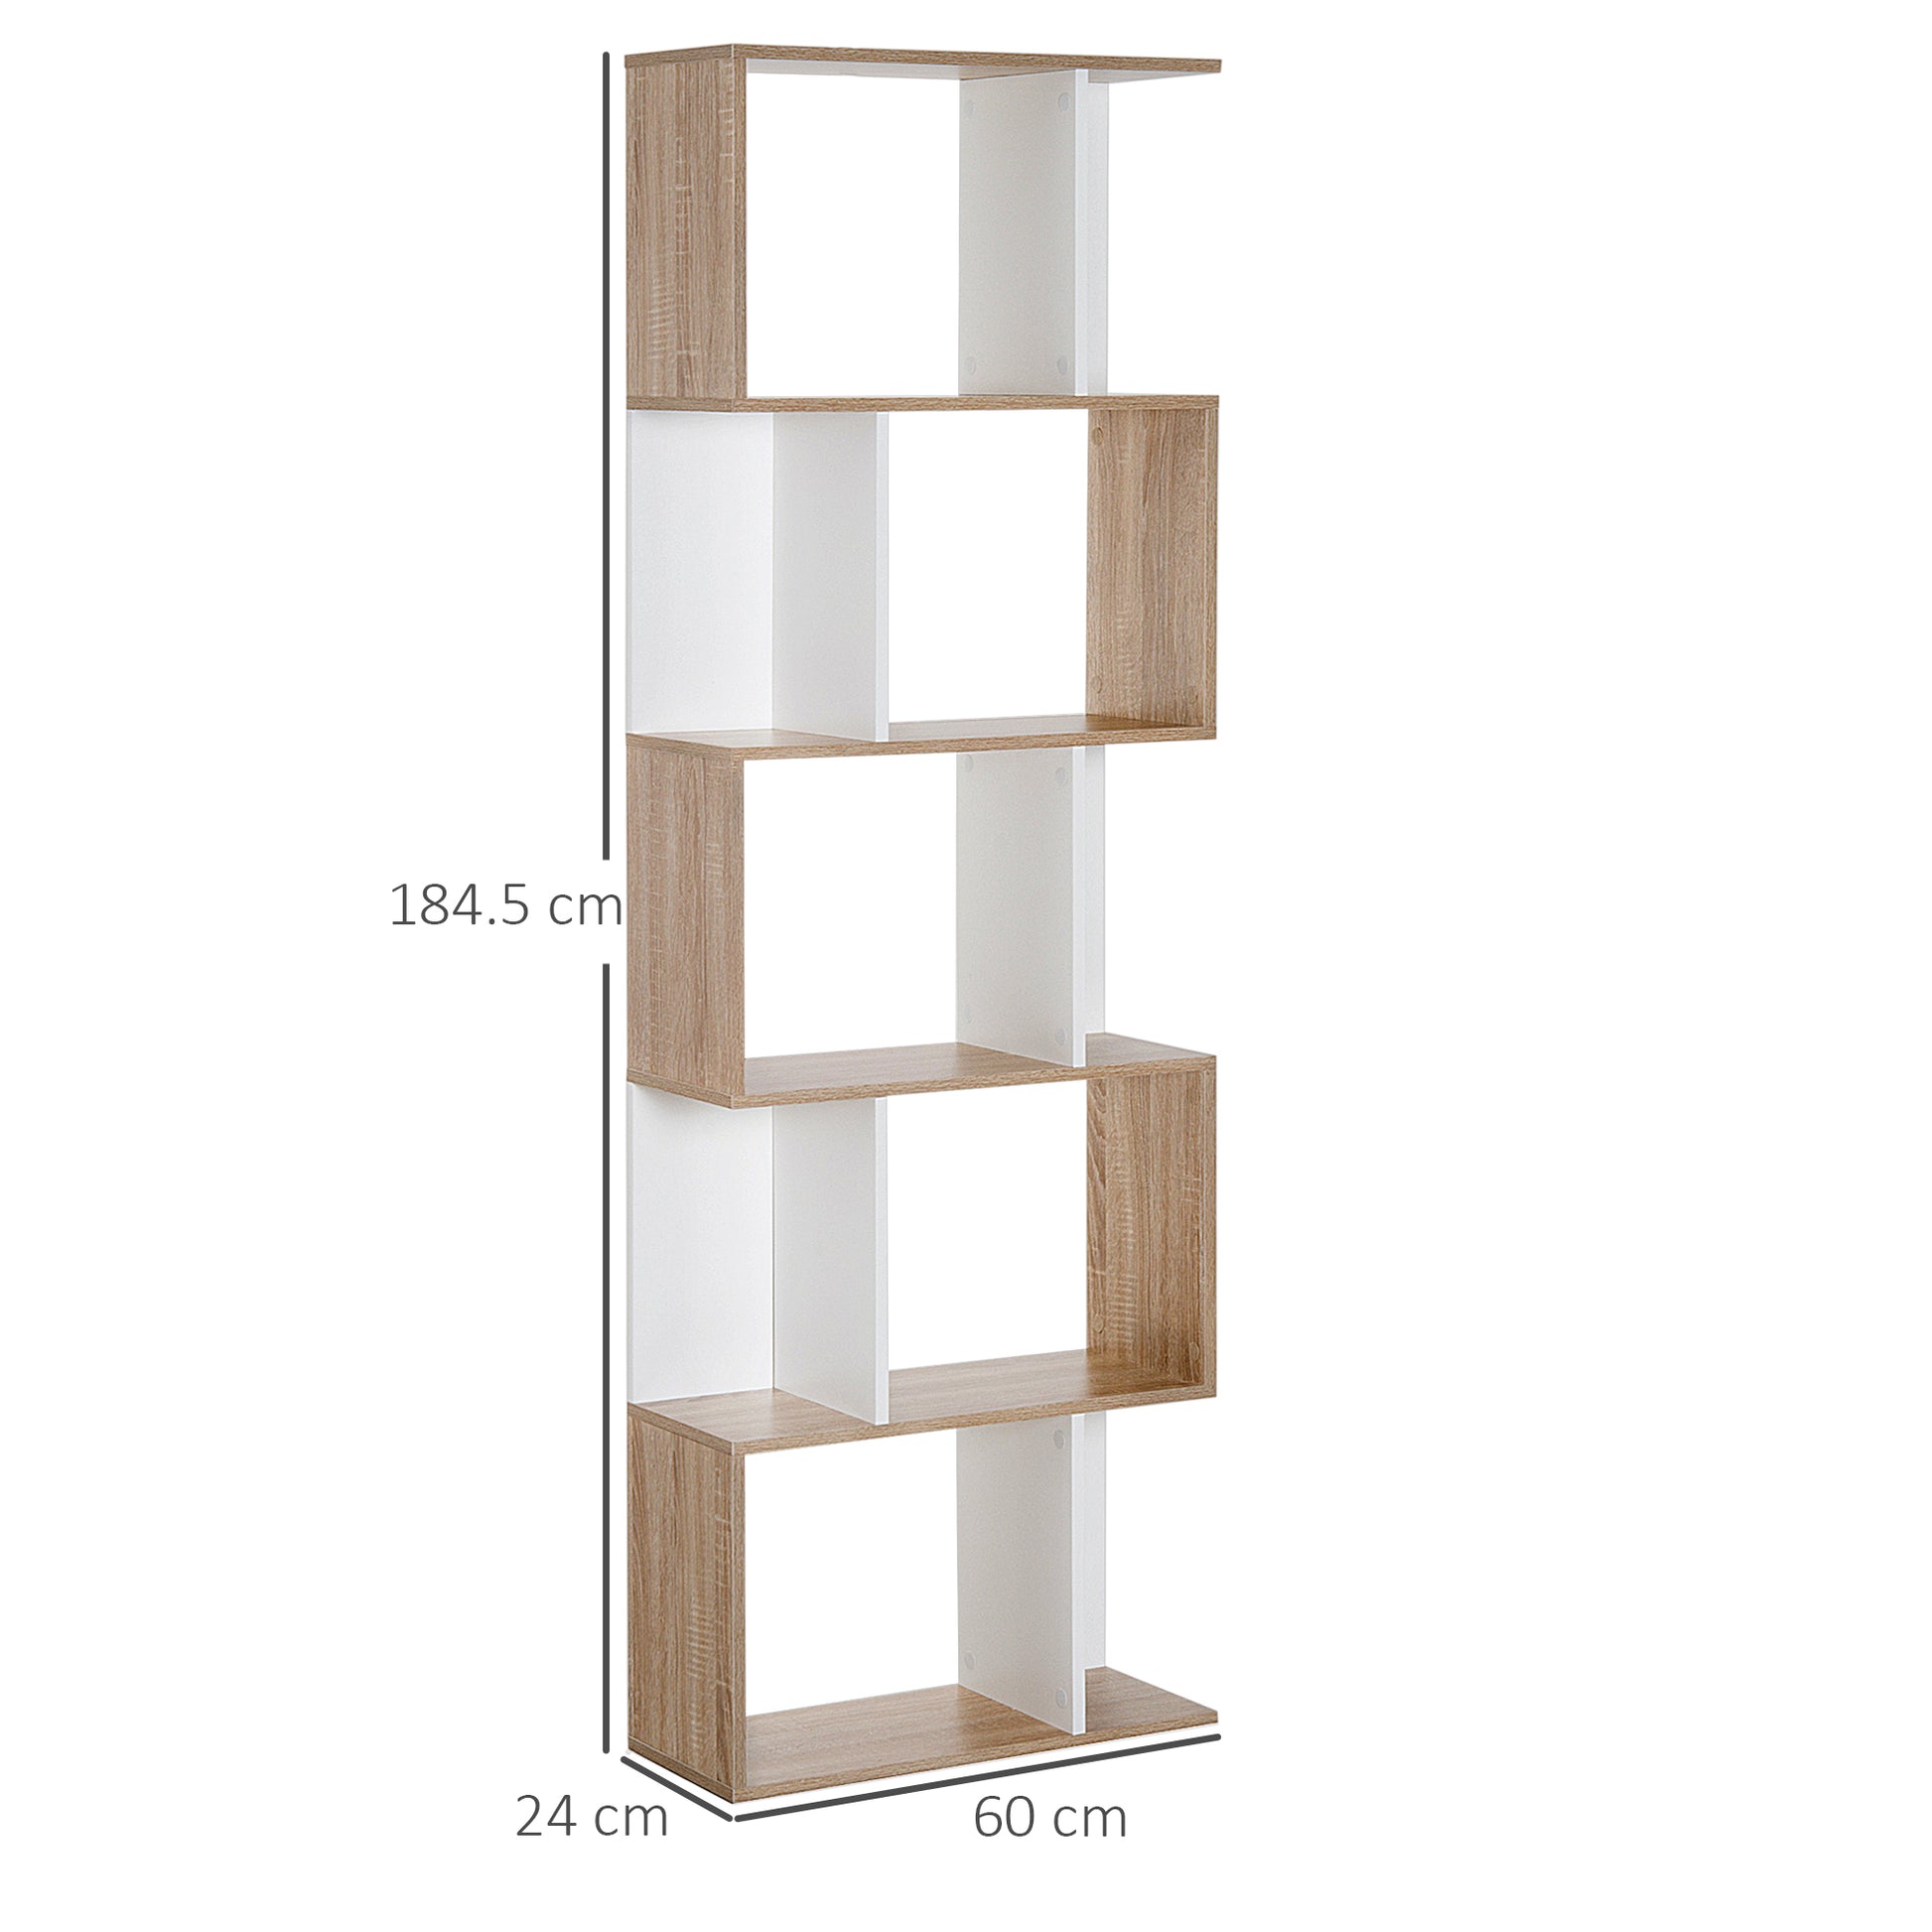 5-tier Bookcase, Storage Display Shelving, S Shape design Unit Divider, White, Wood Effect, HOMCOM, 3